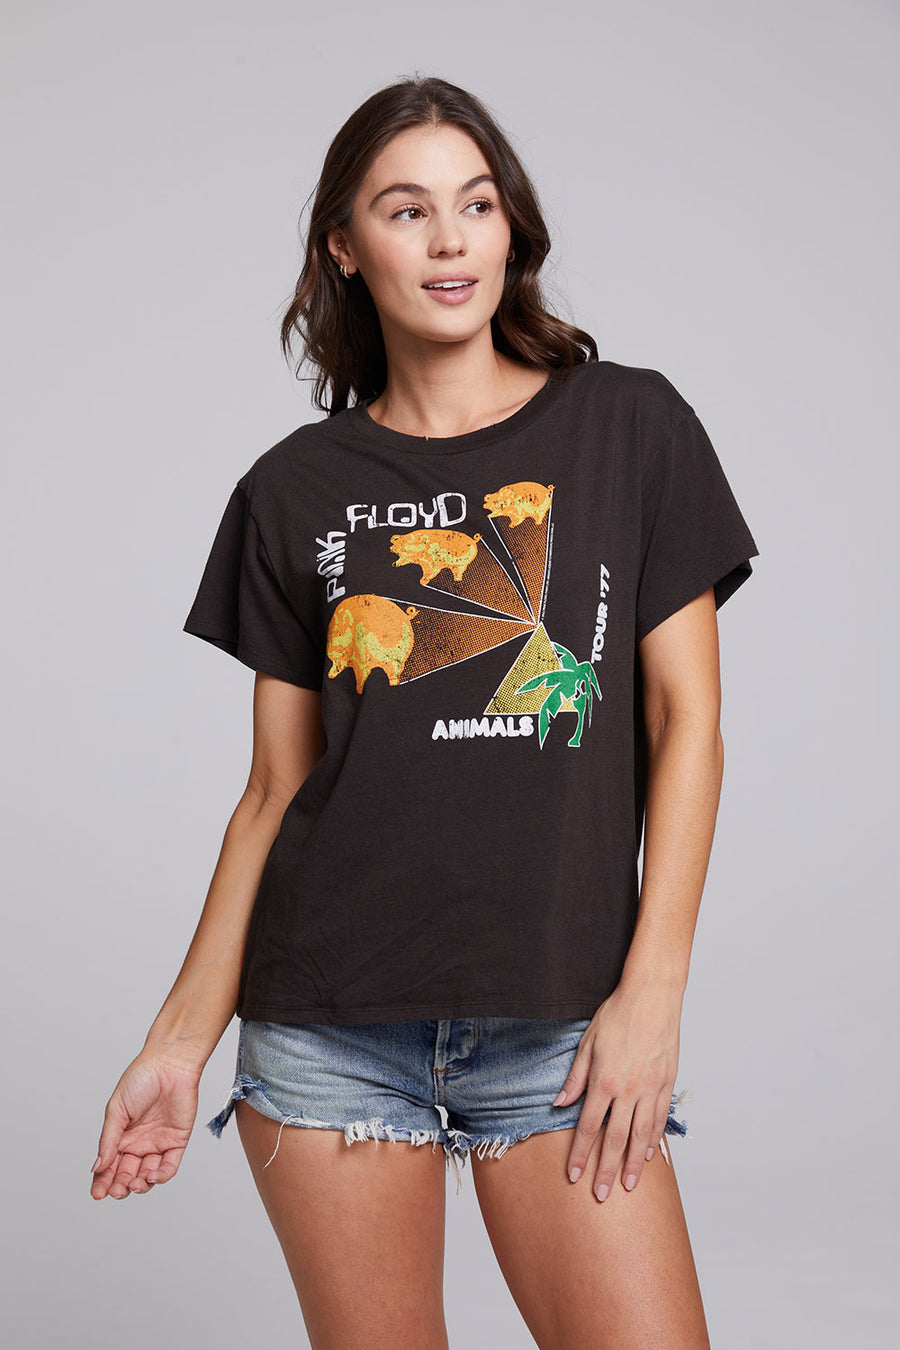 Pink Floyd Animals 77 T-Shirt